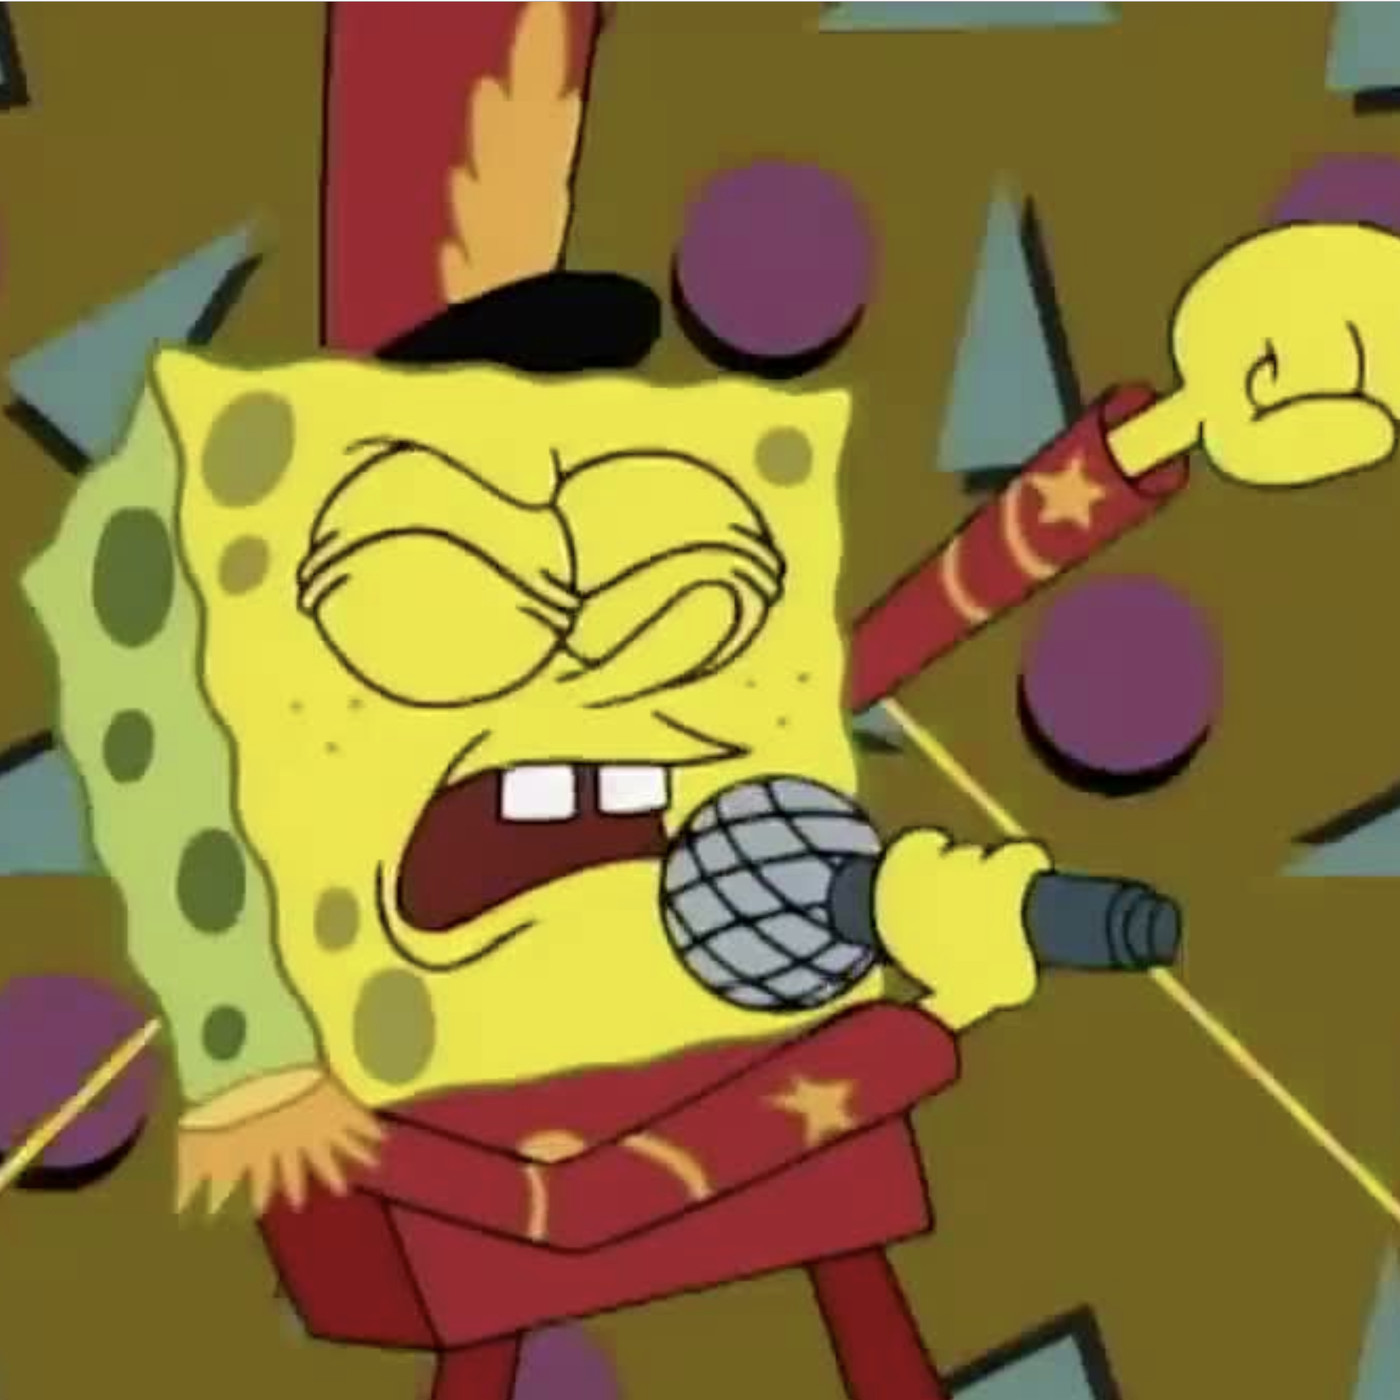 20 Years Of Spongebob Squarepants Its Brilliance In 3 Episodes Vox